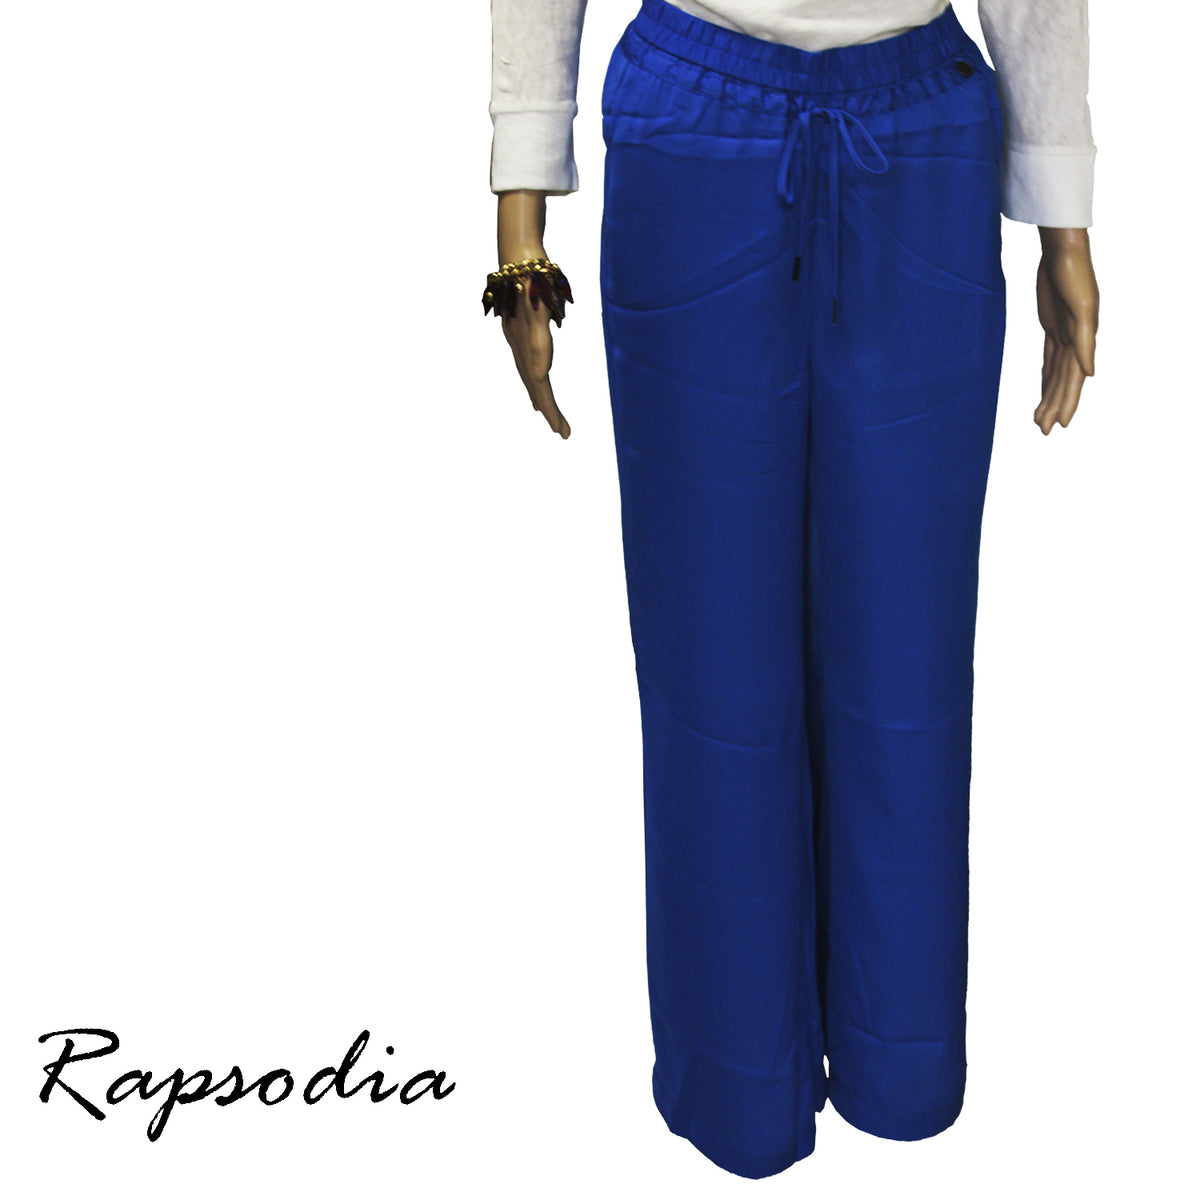 Pantalon Rapsodia Fla Azul